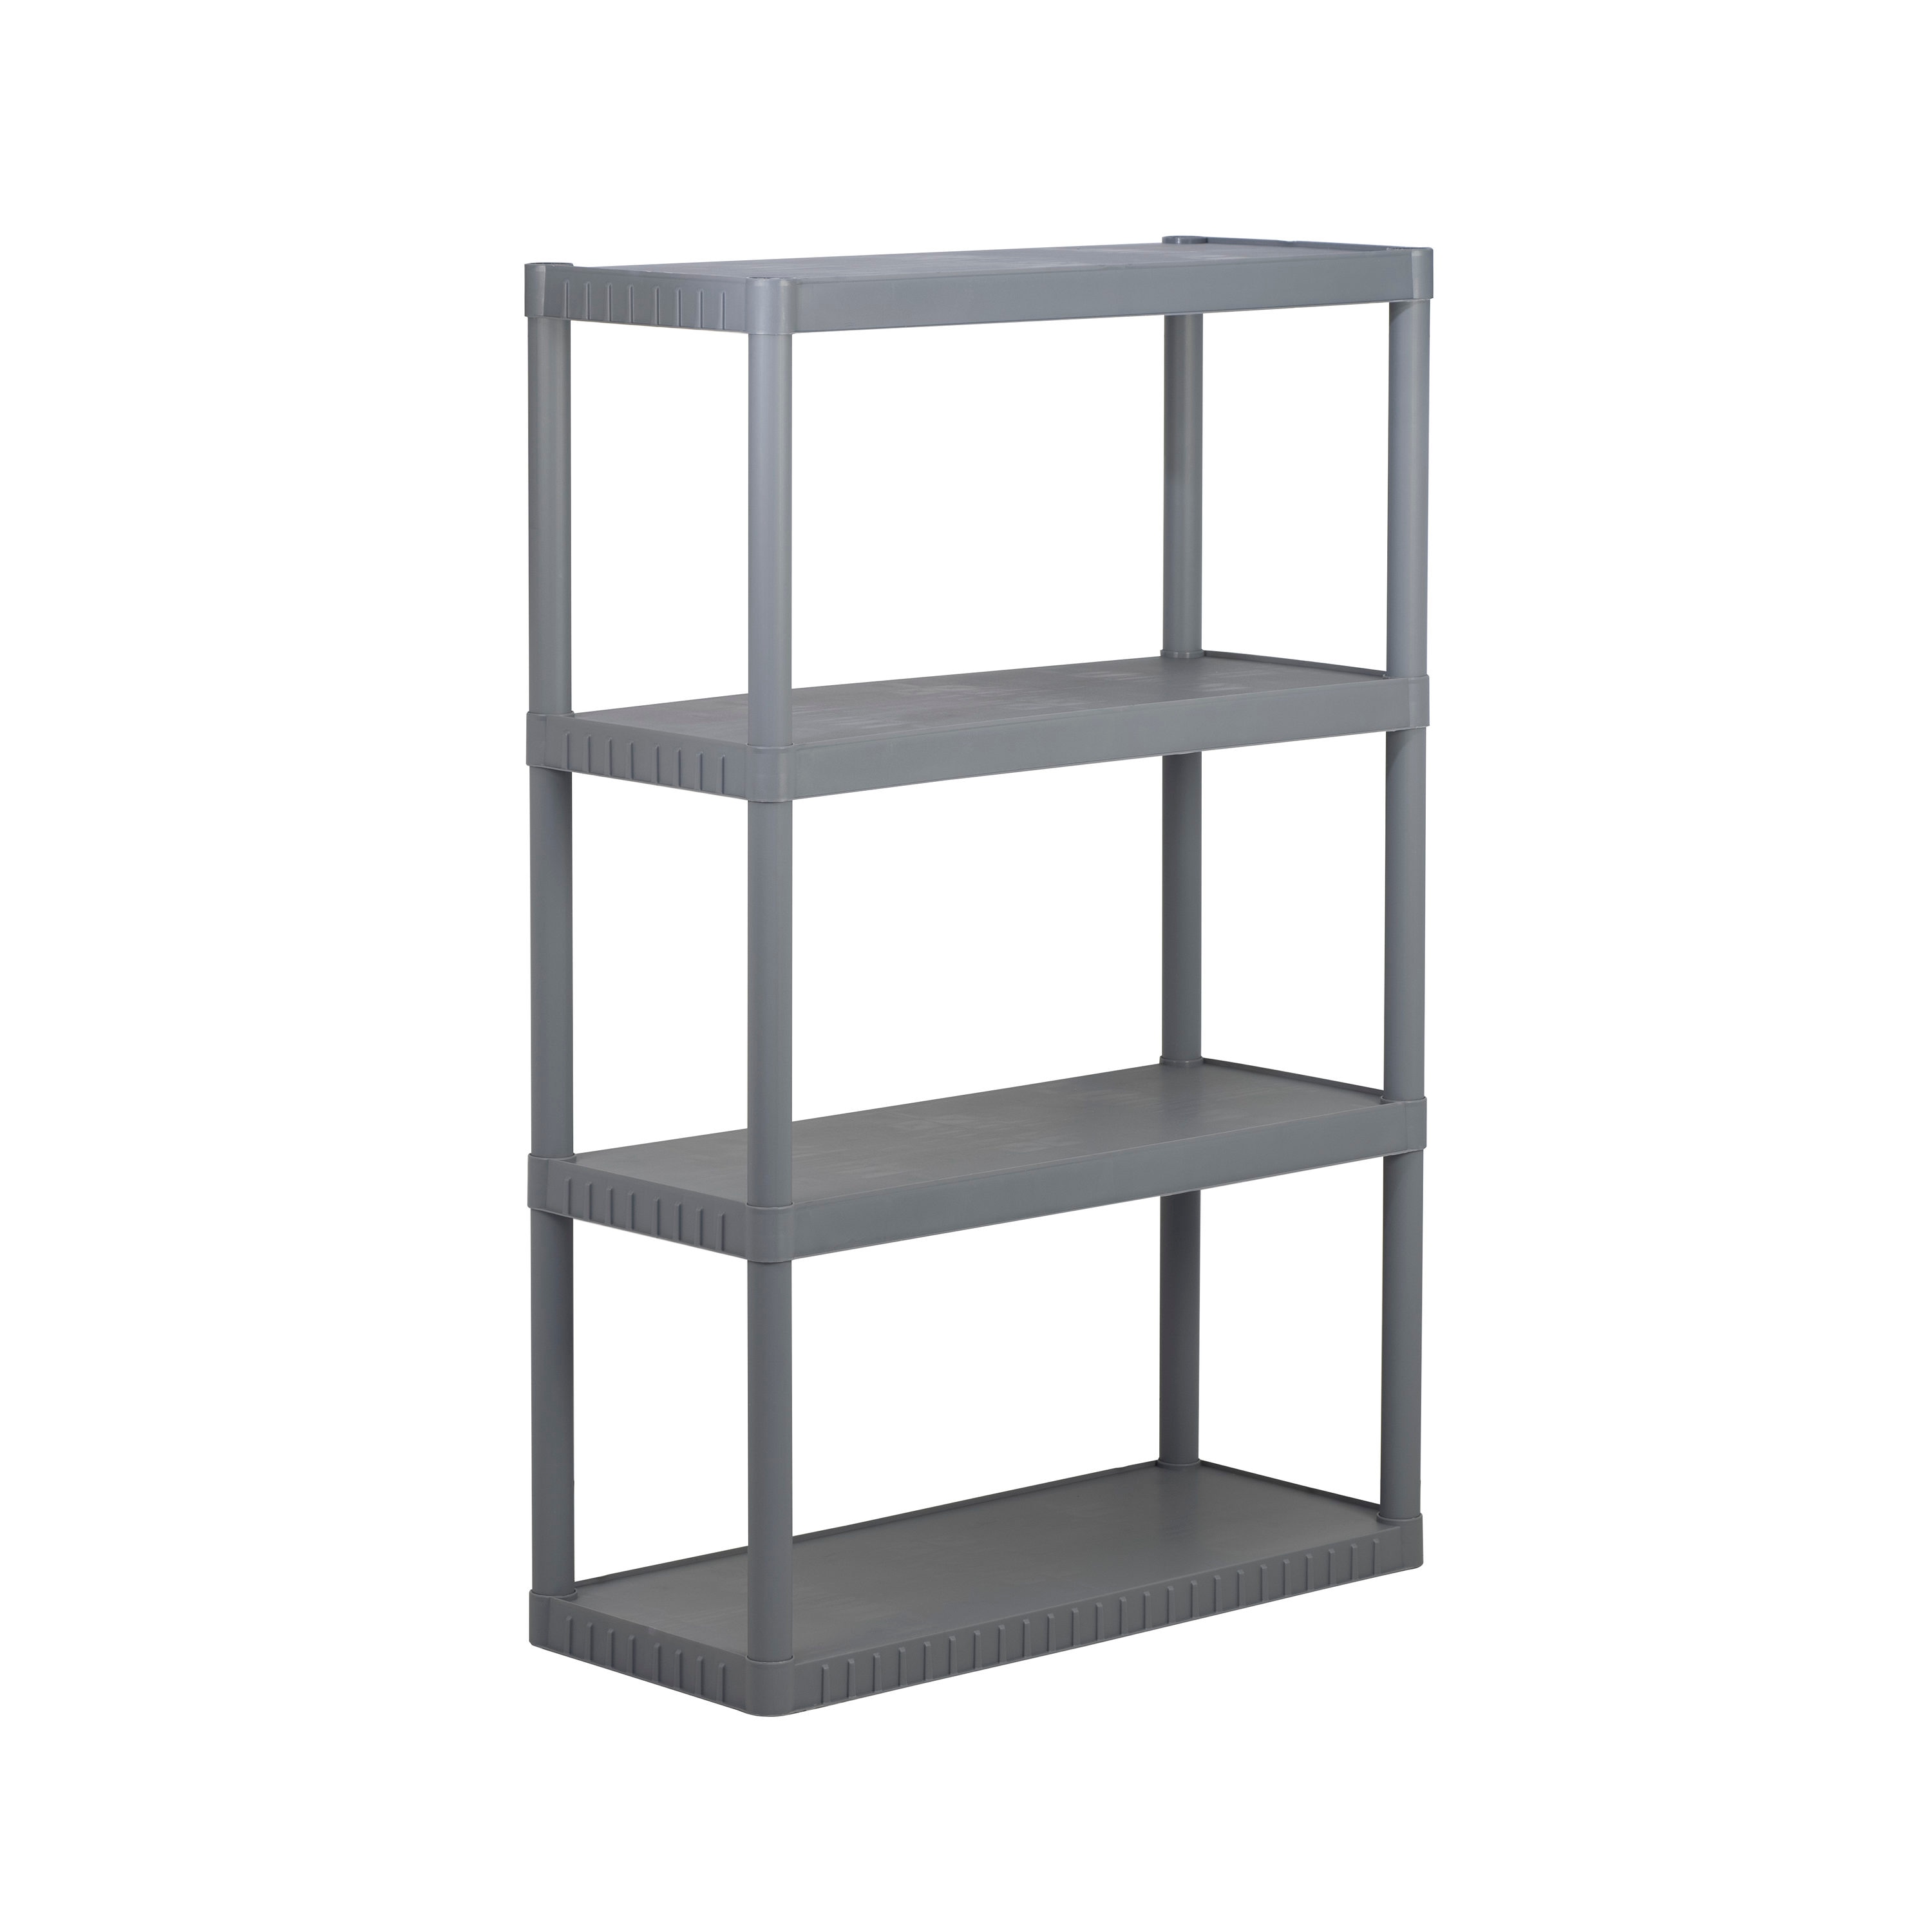 4 Shelves Shelving Unit 22 x 14 x 48.25-In. White Plastic